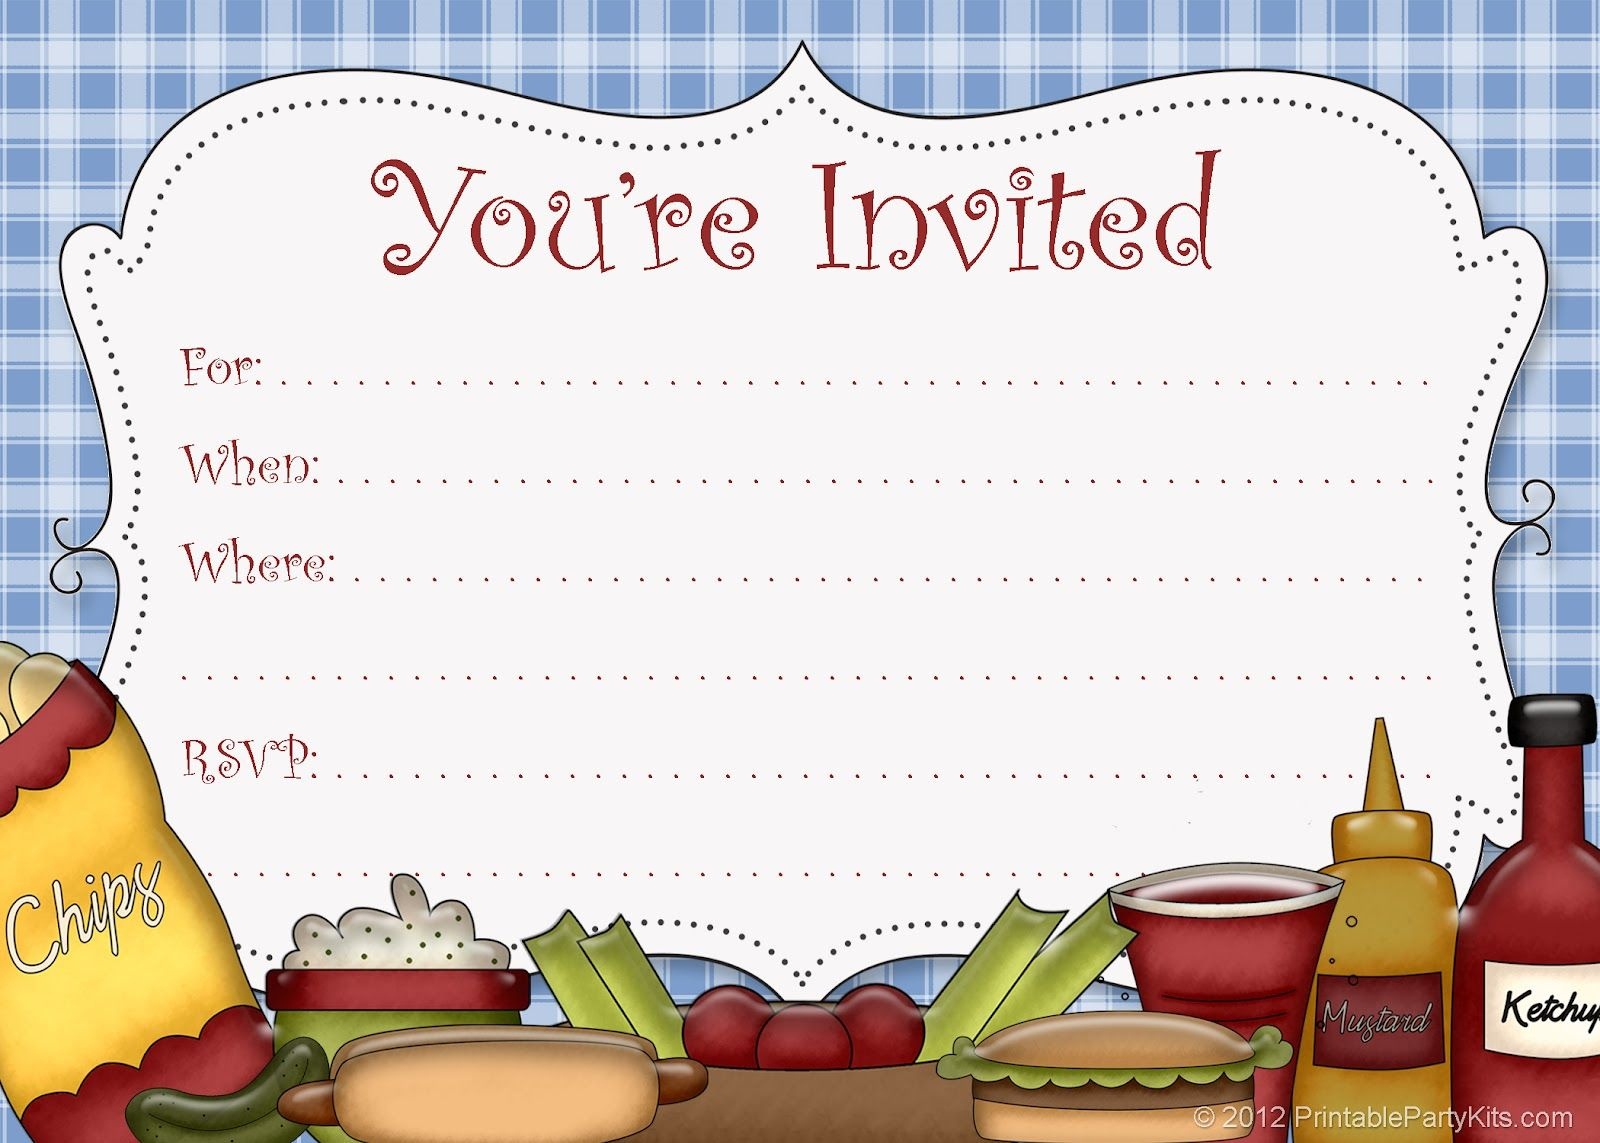 free-printable-cookout-invitations-free-printable